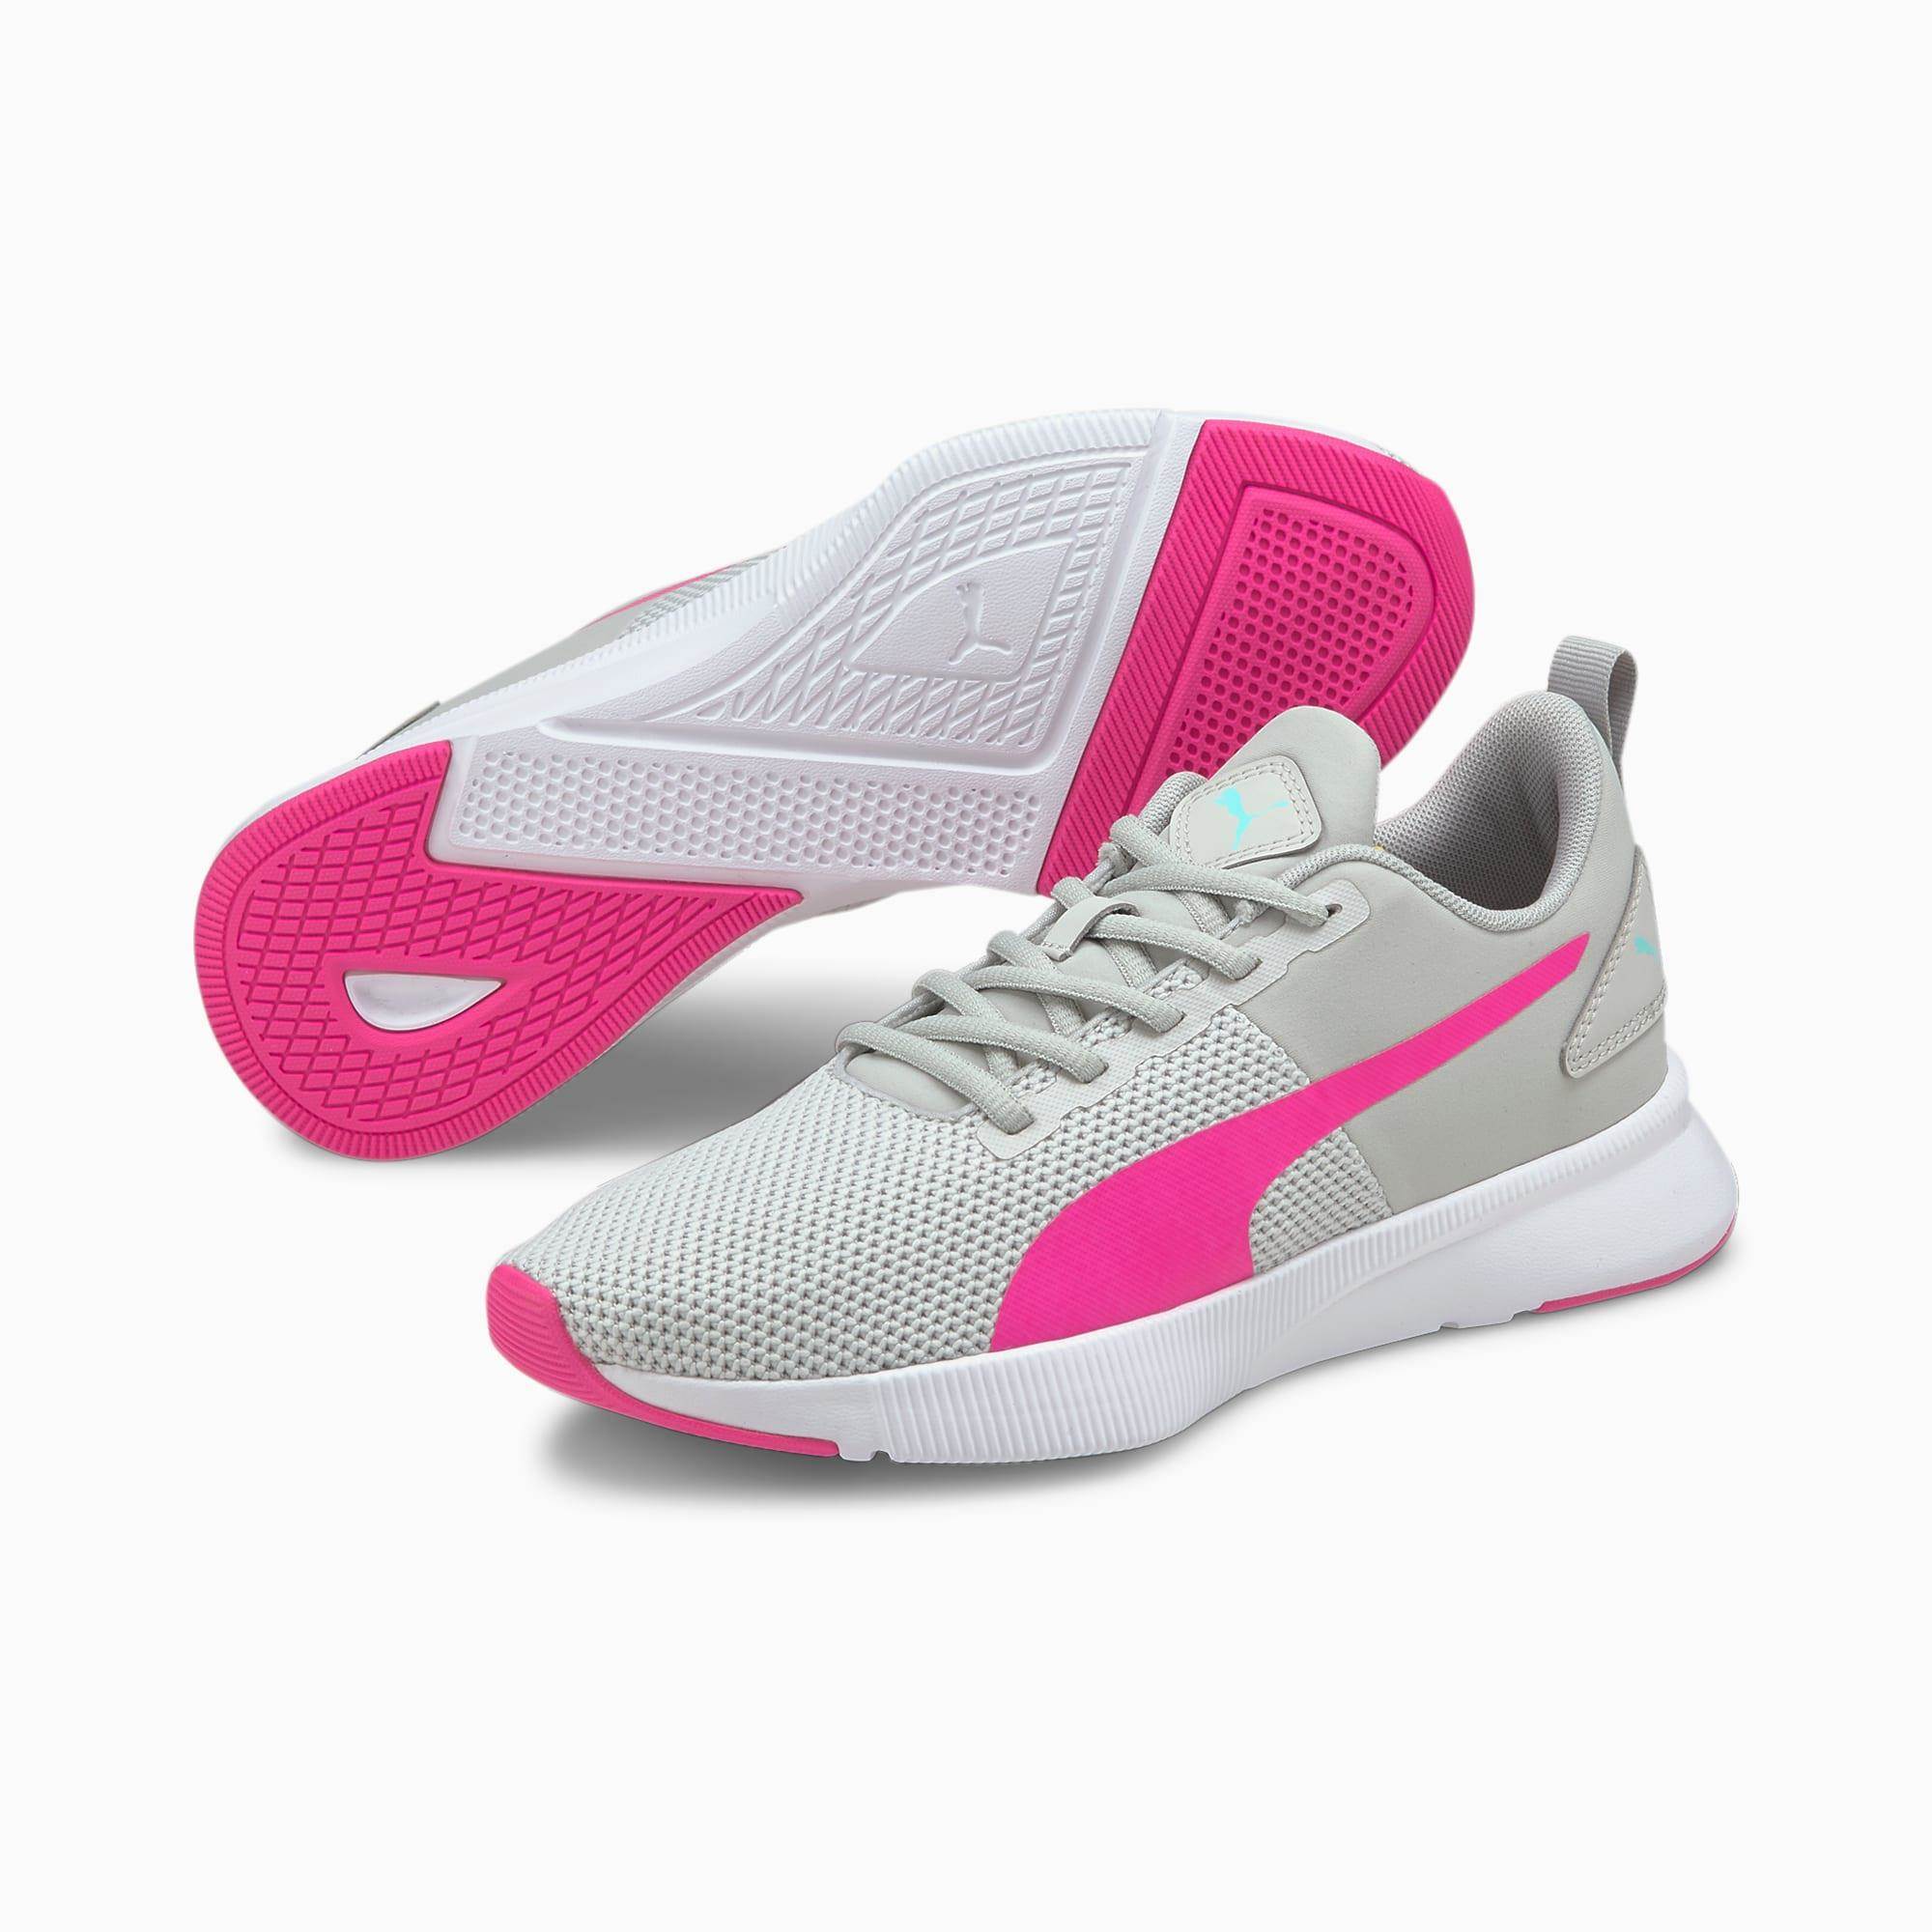 Puma Brand Women's Flyer Runner Sports Shoes 192257 45 (Grey/Pink) ::  RAJASHOES